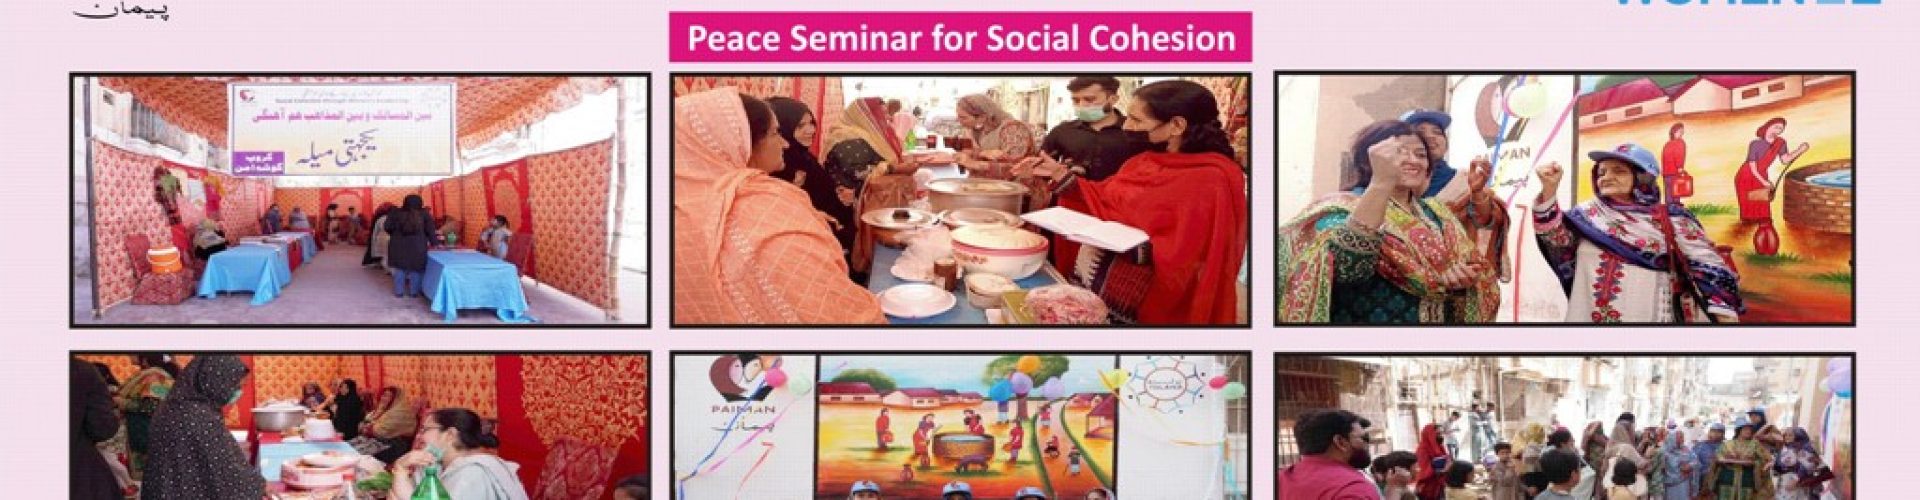 Peace Seminar for Social Cohesion